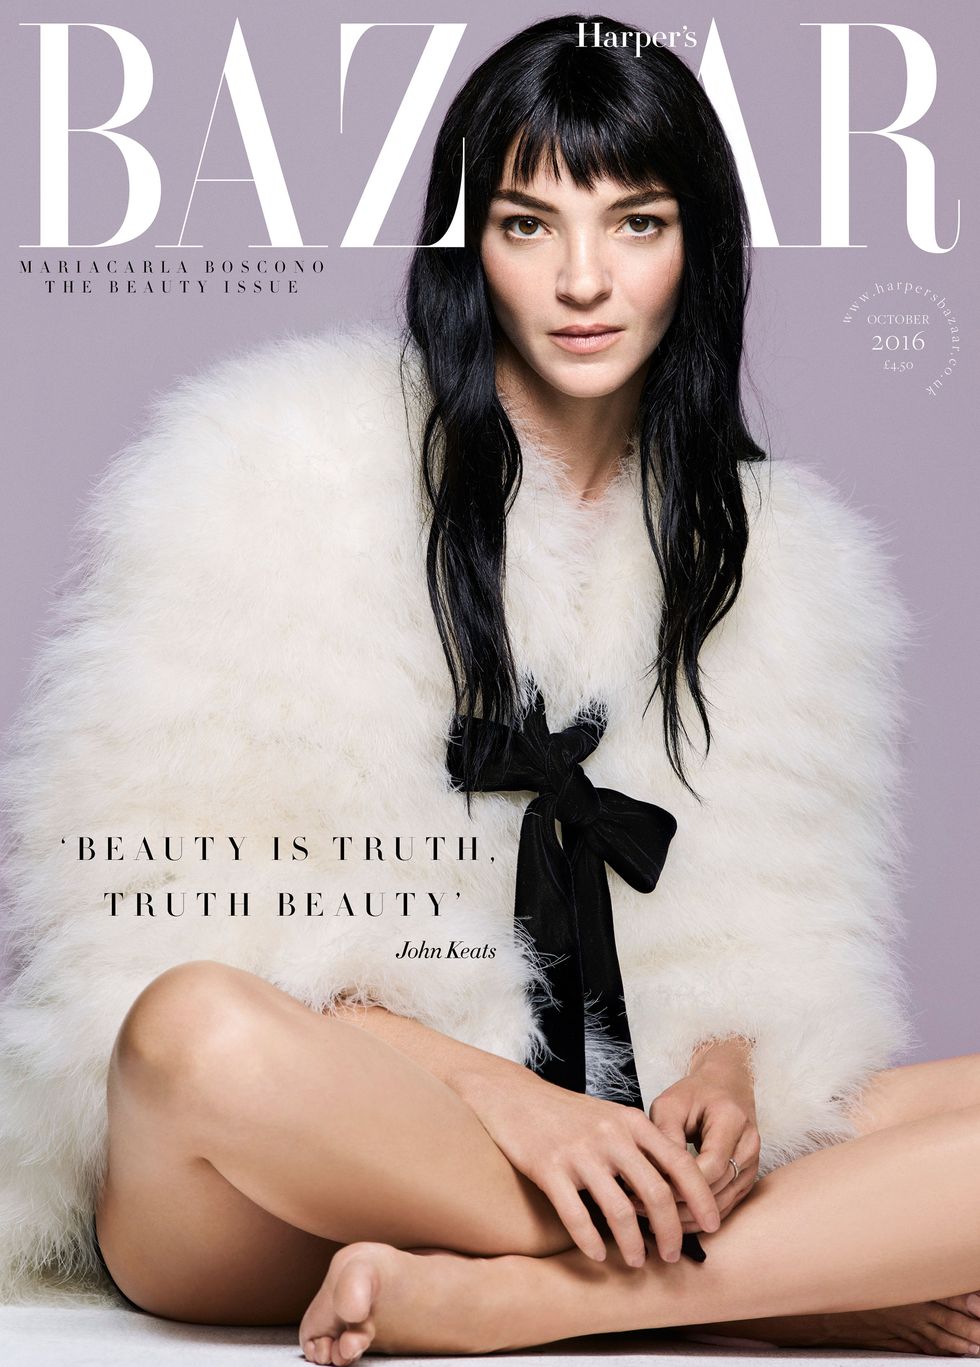 Mariacarla Boscono stars on the October issue cover of Harper's Bazaar